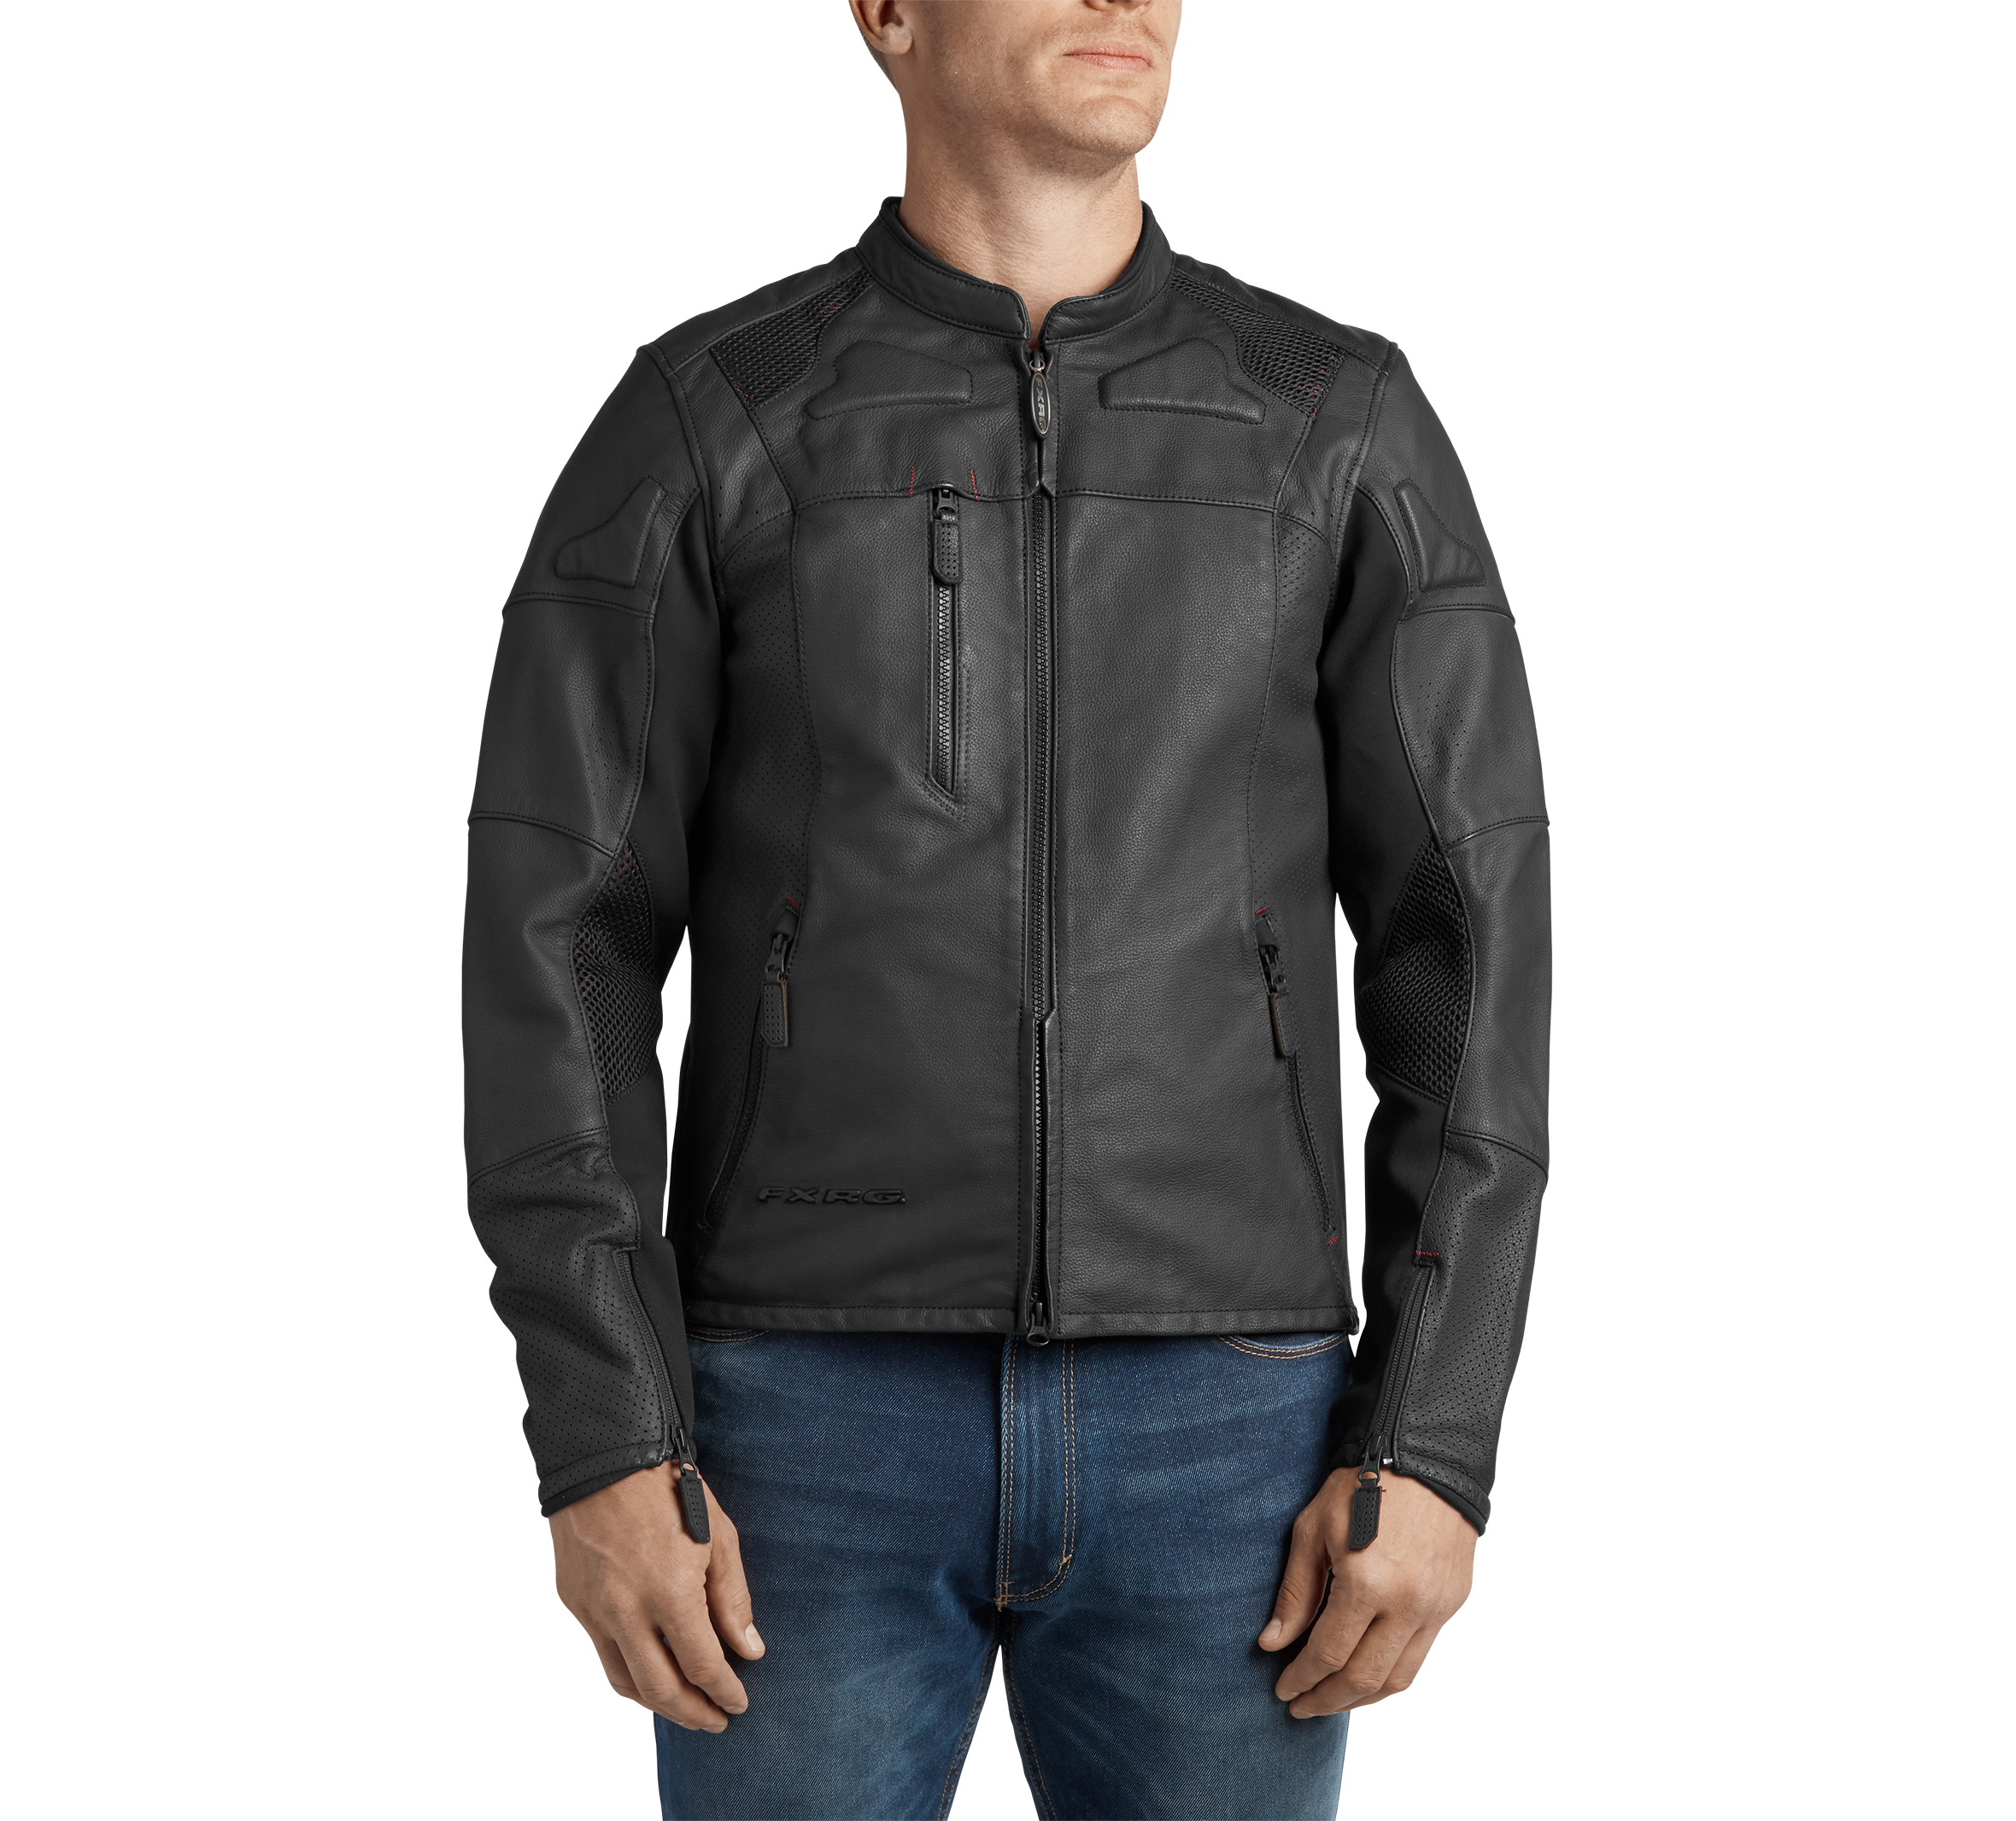 Fxrg Perforated Slim Fit Leather Jacket Fur Herren 98057 19em Harley Davidson Deutschland